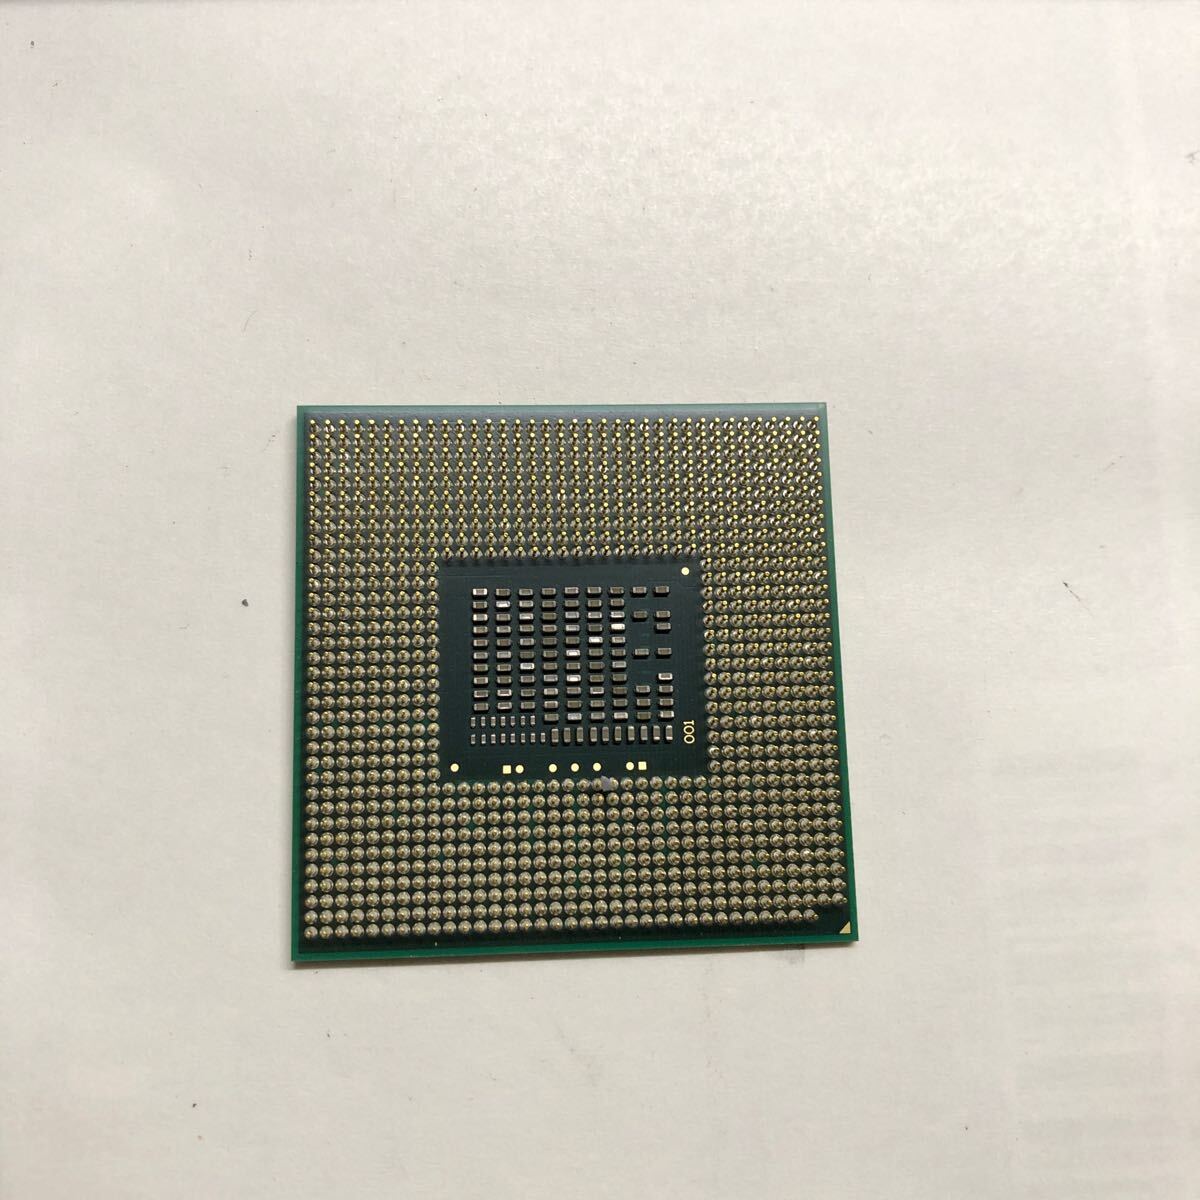 Intel Core i3-2328M SR0TC 2.20GHz /125